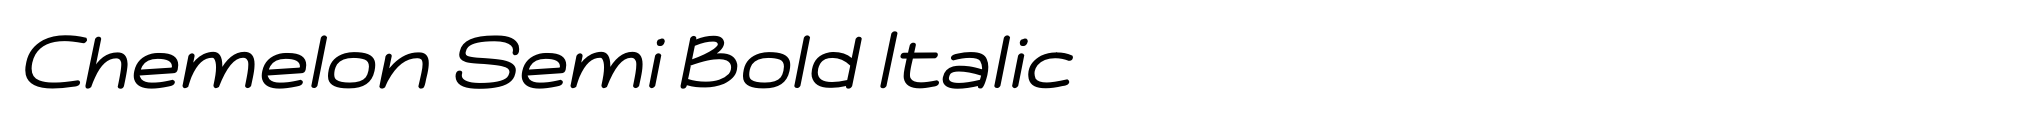 Chemelon Semi Bold Italic image